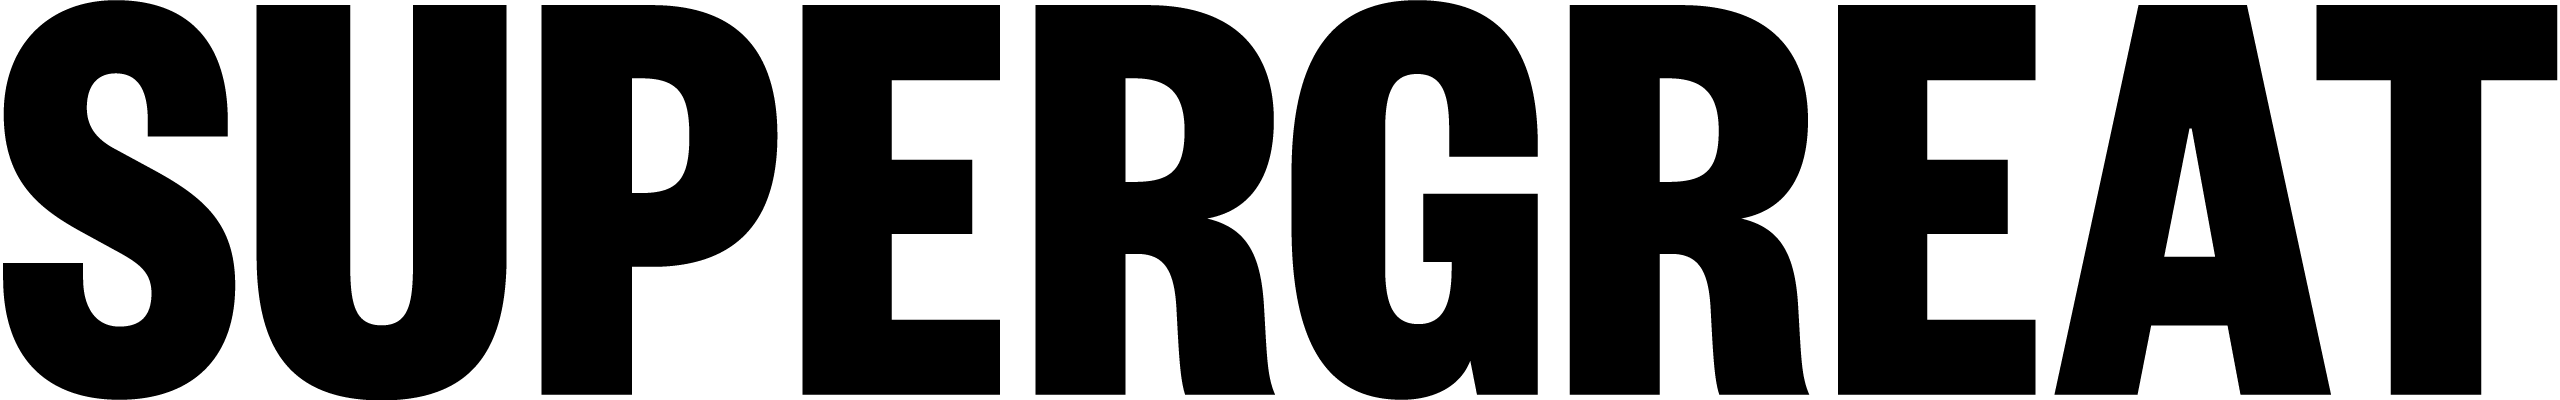 Supergreat Logo